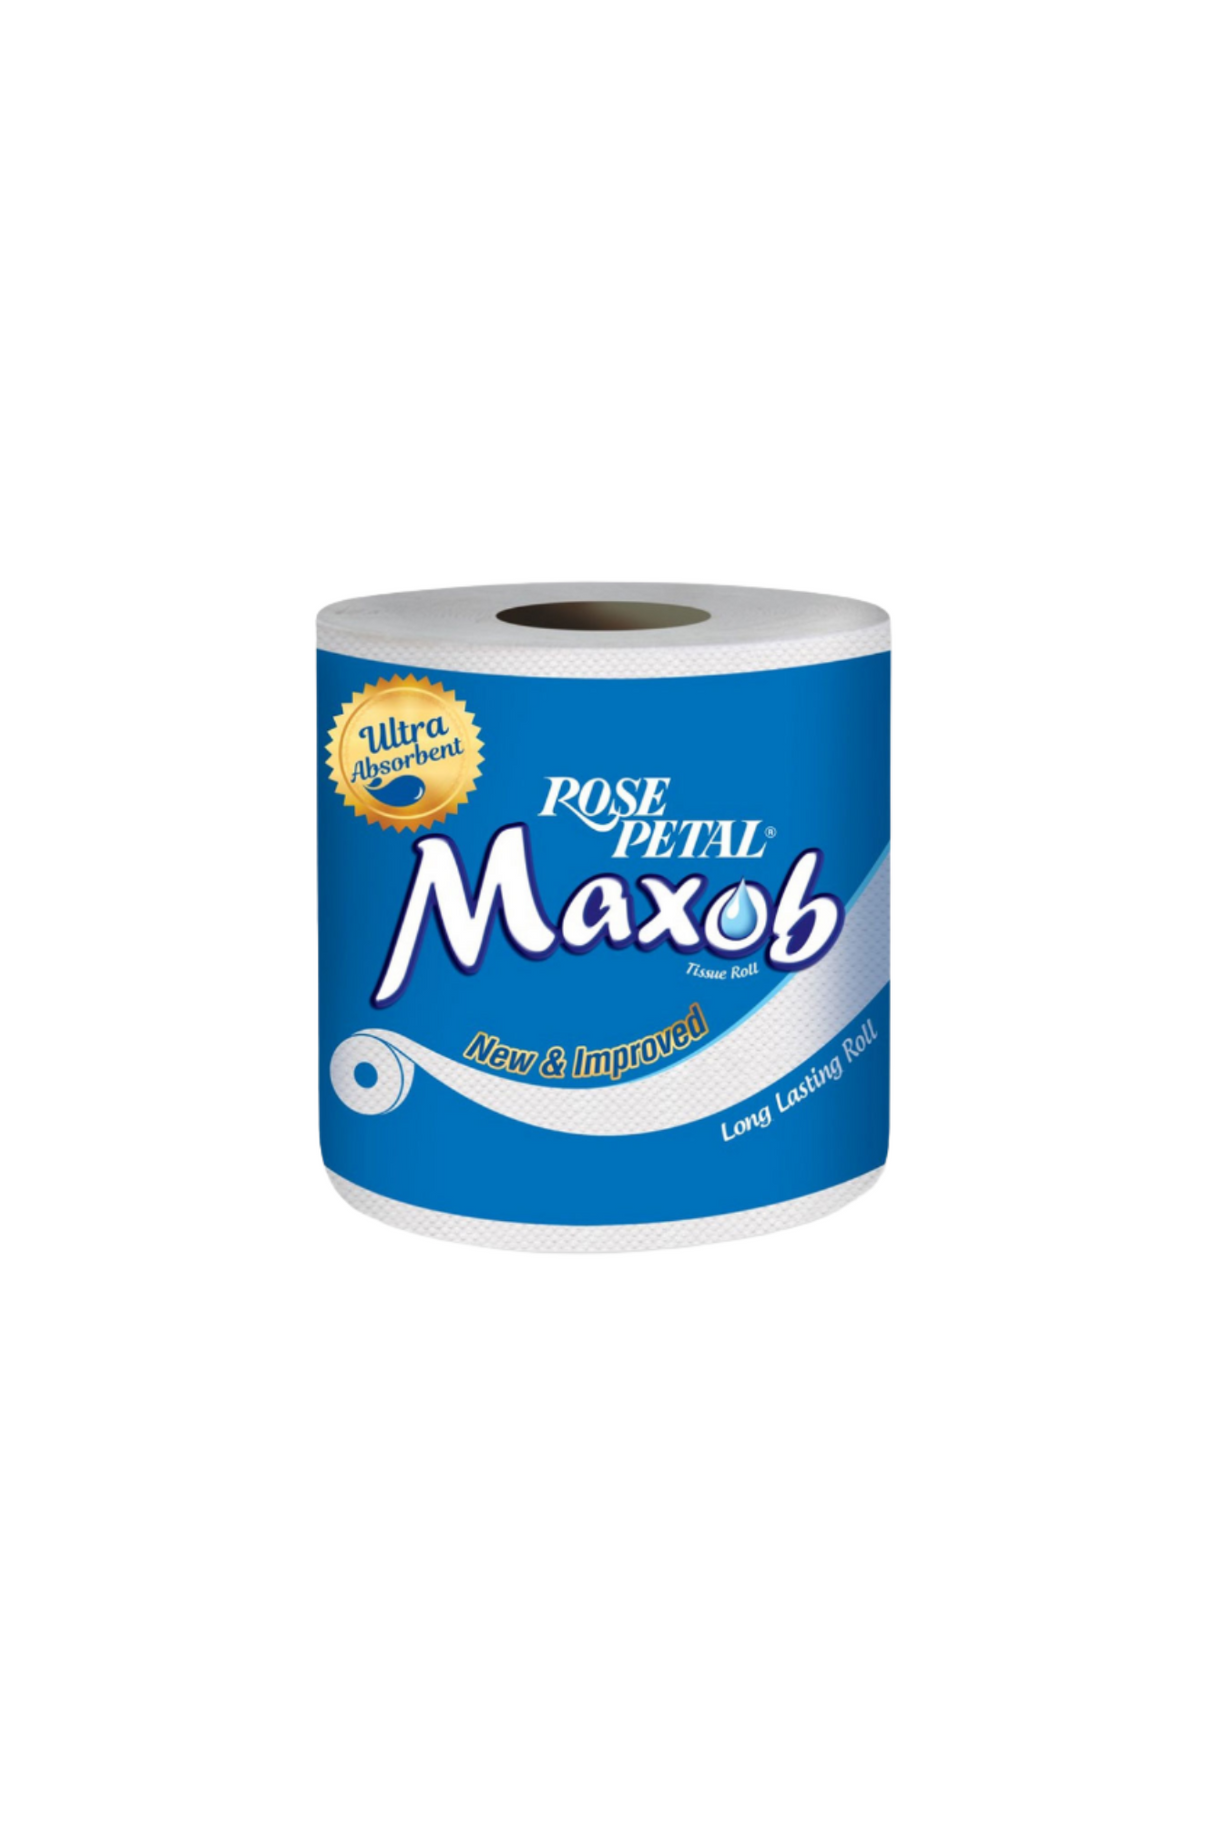 rose petal tissue paper roll maxob